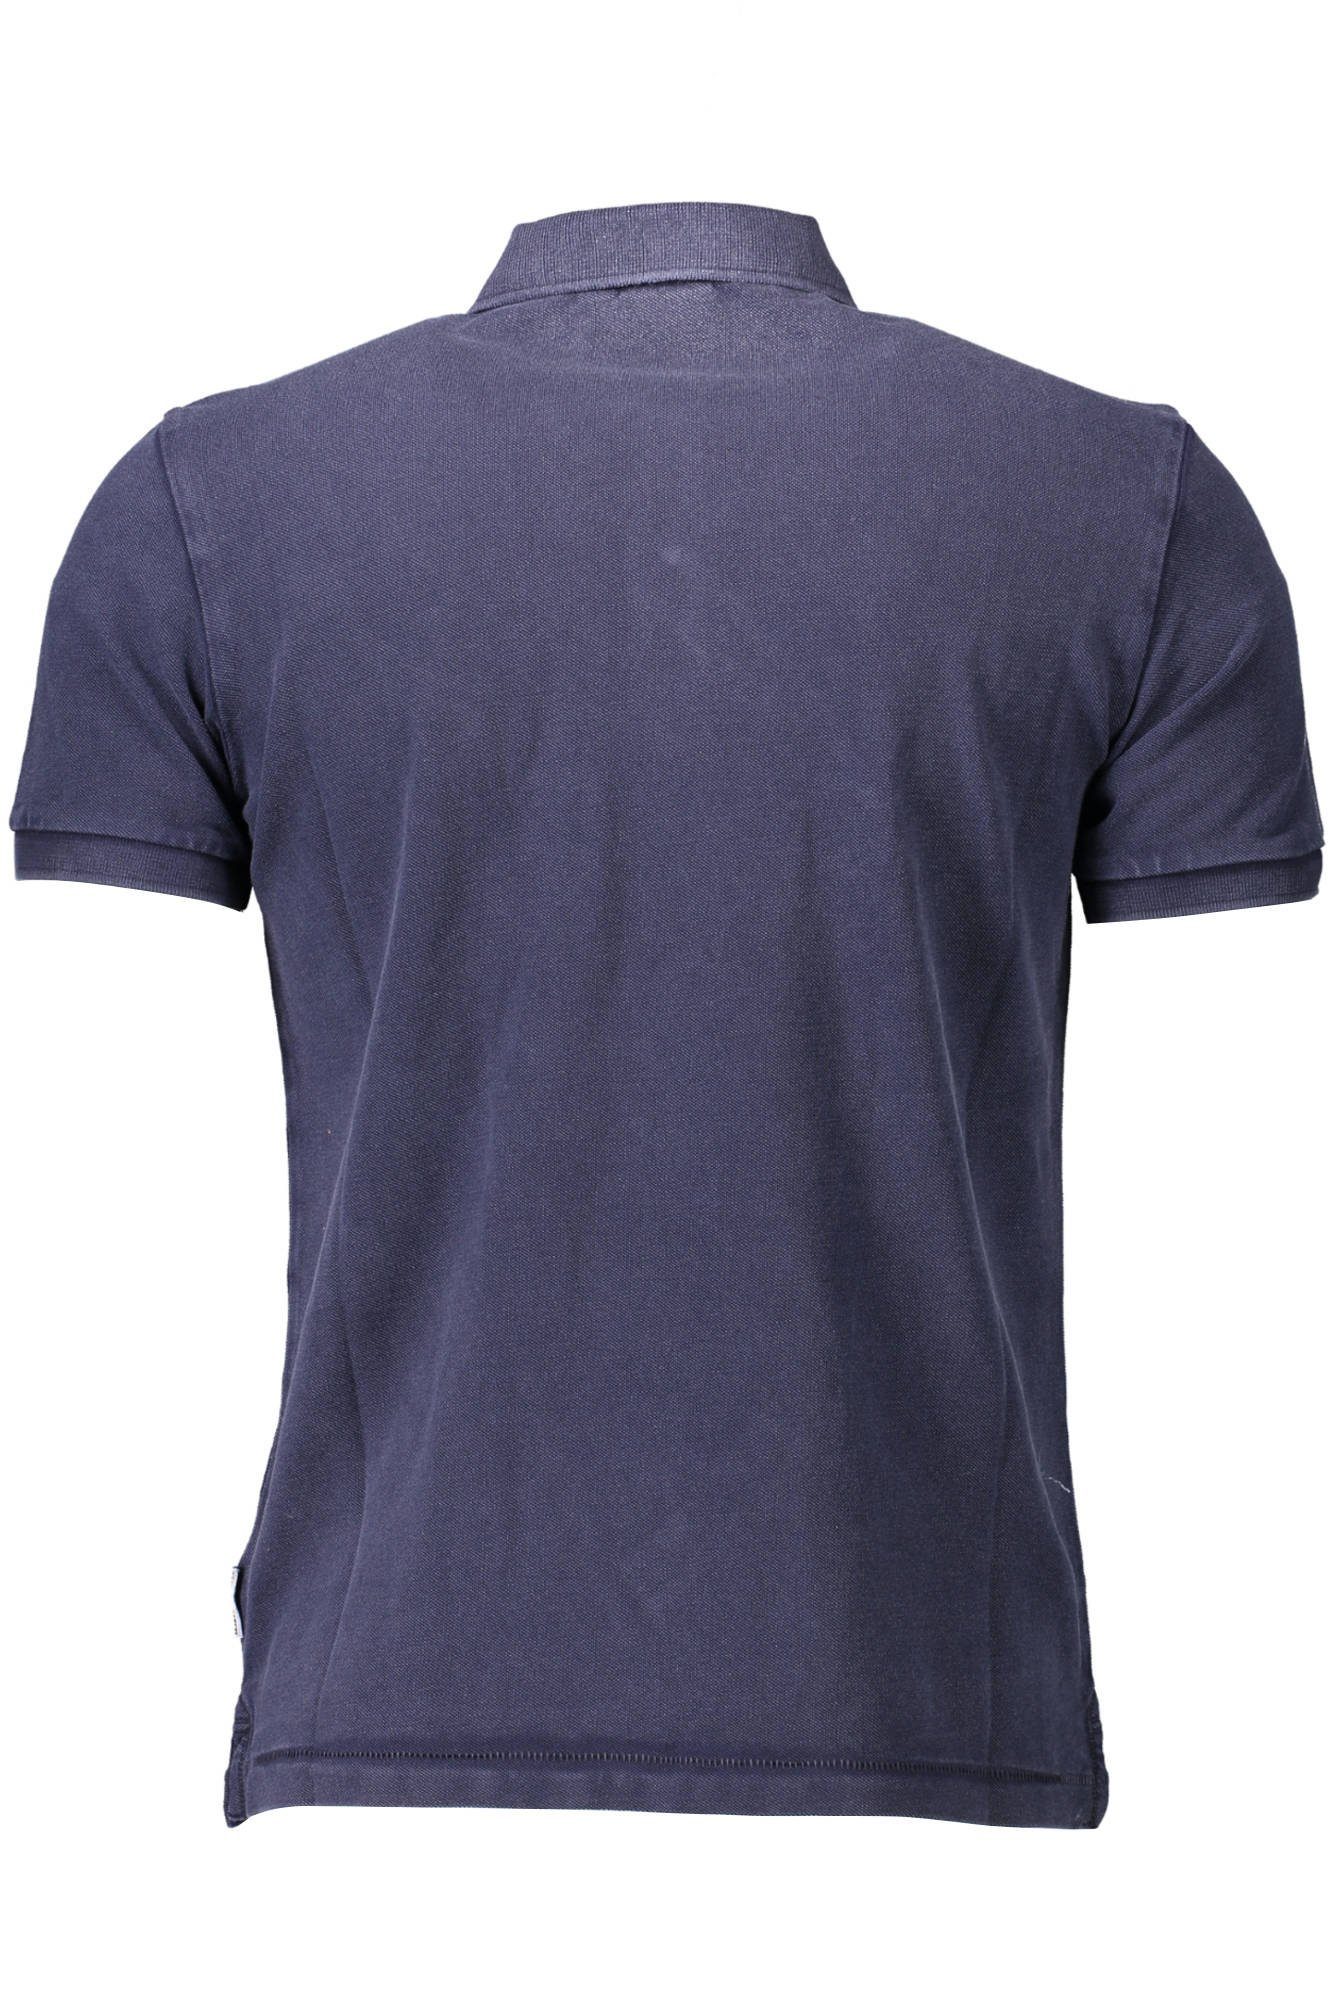 blu Napapijri Napapijri Poloshirt Polohemd Poloshirt Herren (176 Knöpfen blau T-Shirt mit marine) kurzarm,